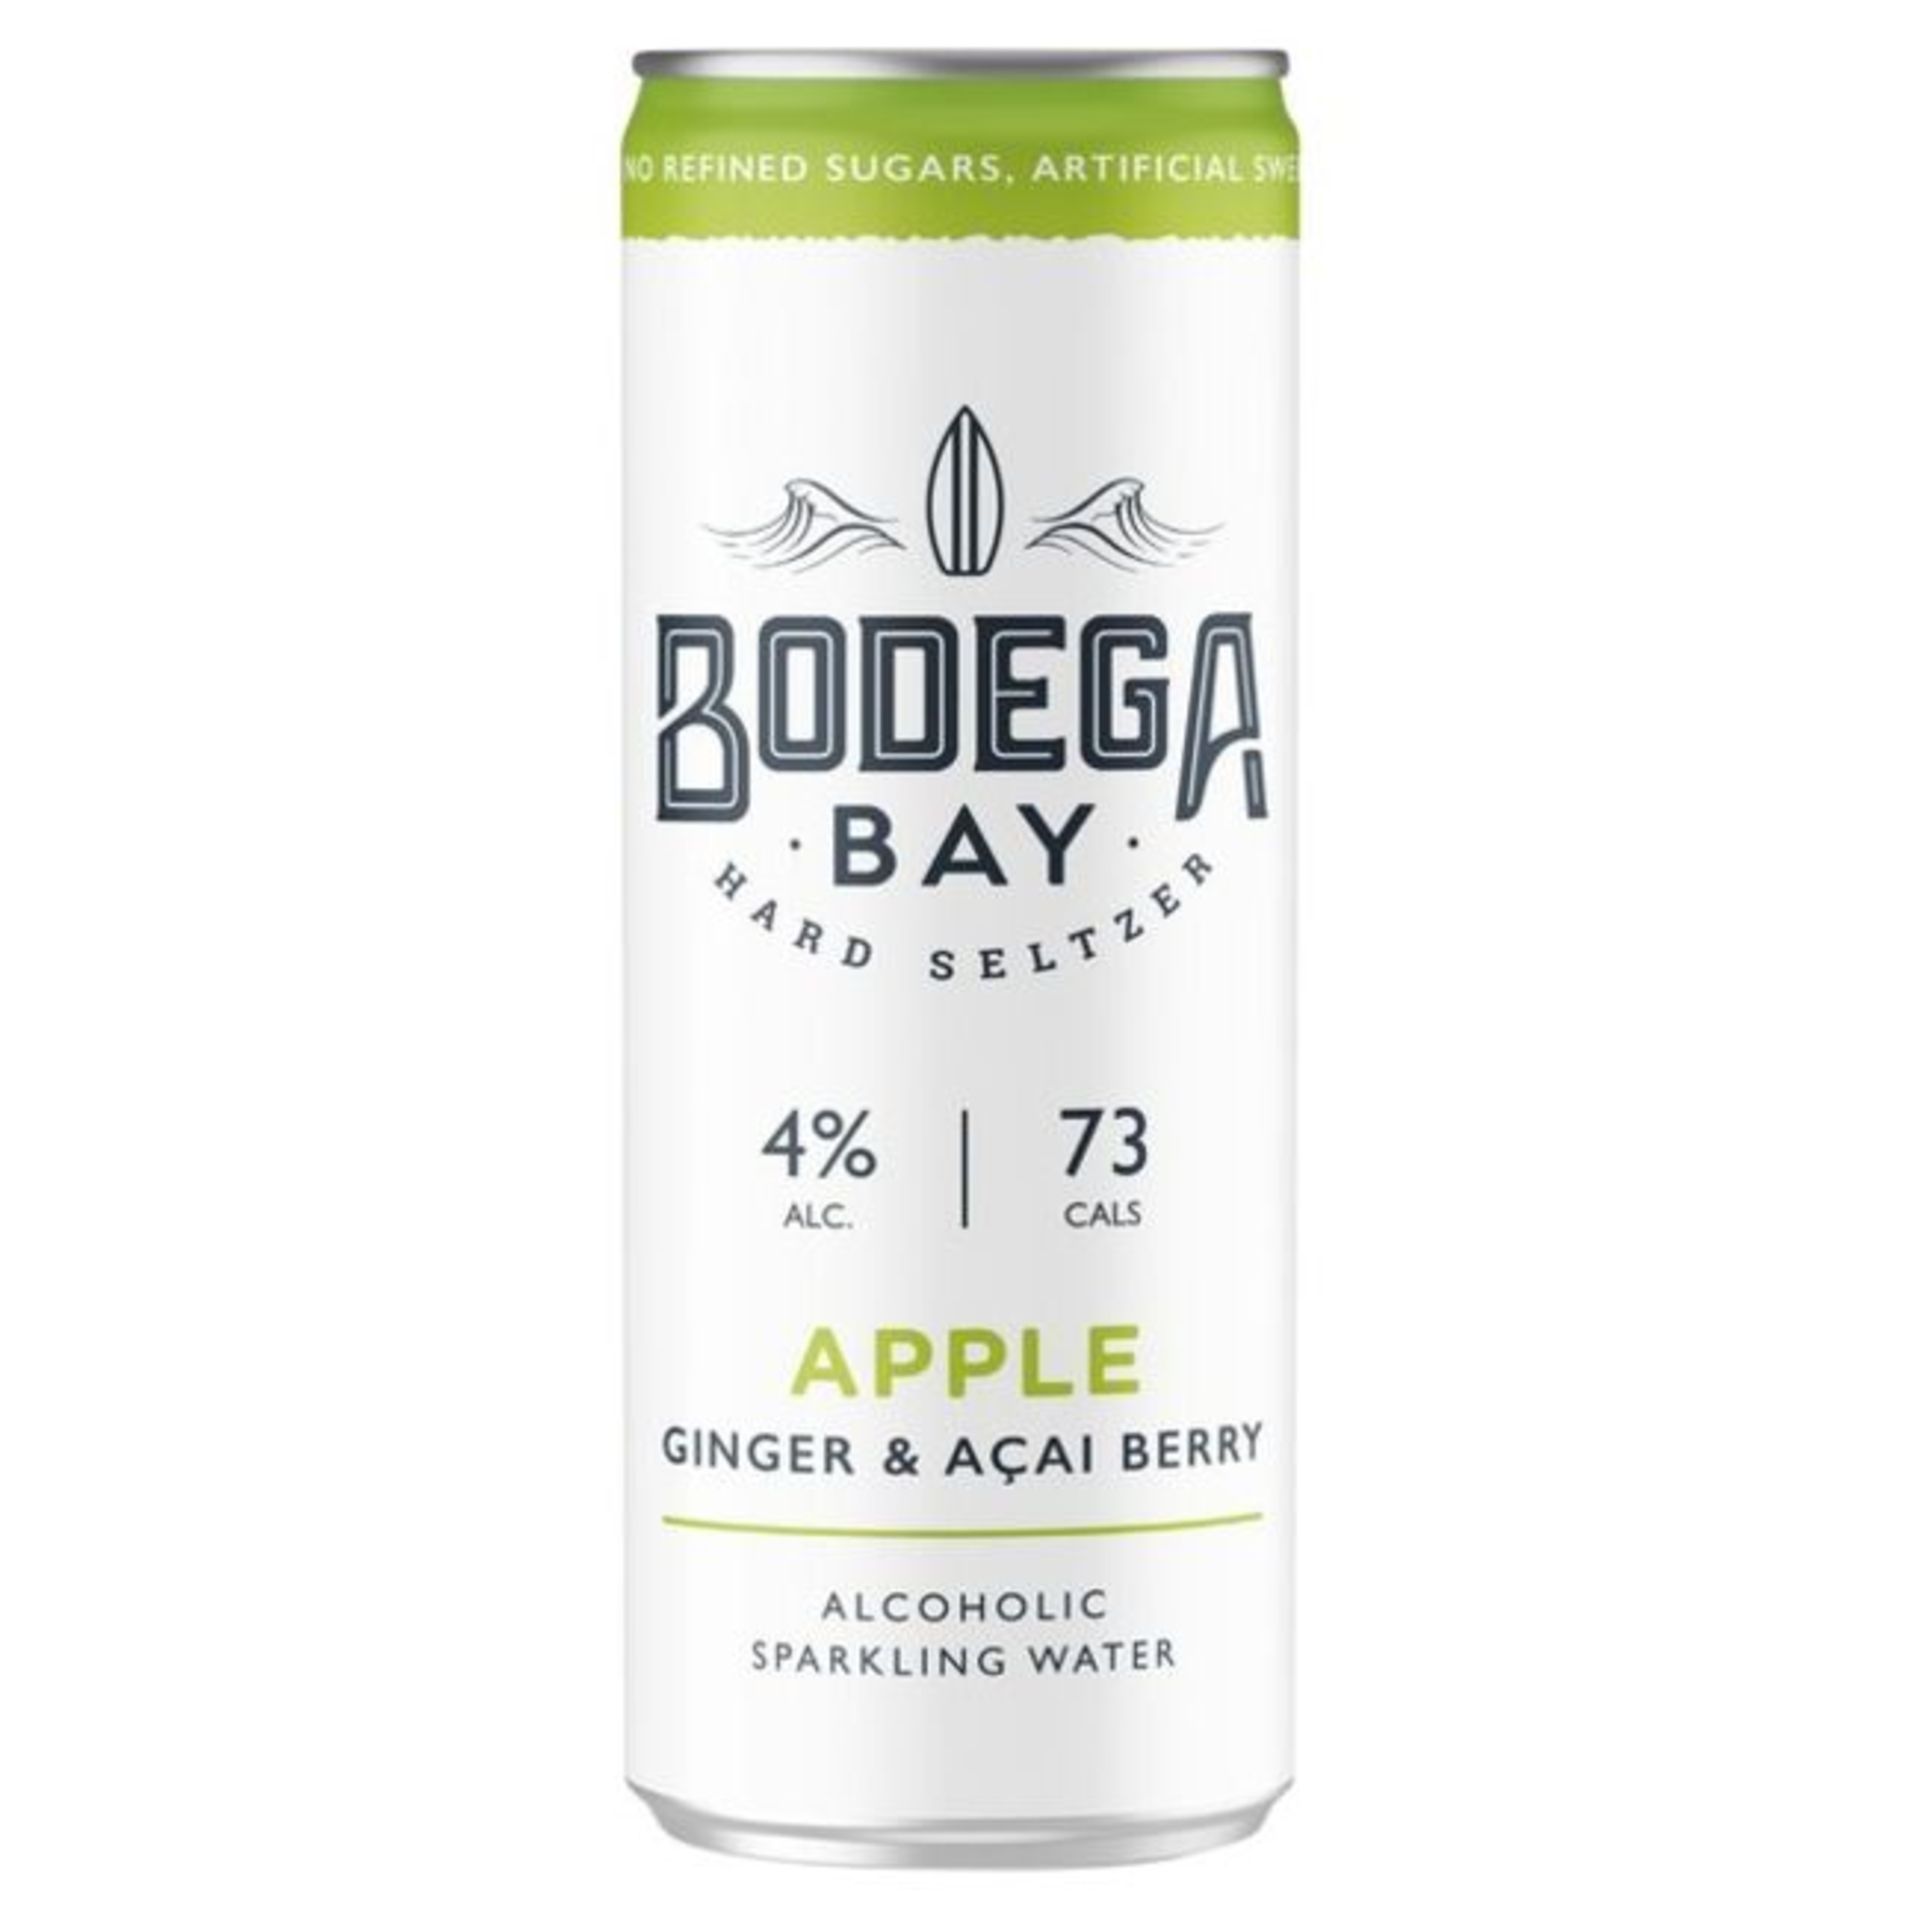 24 x Bodega Bay Hard Seltzer 250ml Alcoholic Sparkling Water Drinks - Apple Ginger & Acai Berry - 4% - Image 4 of 7